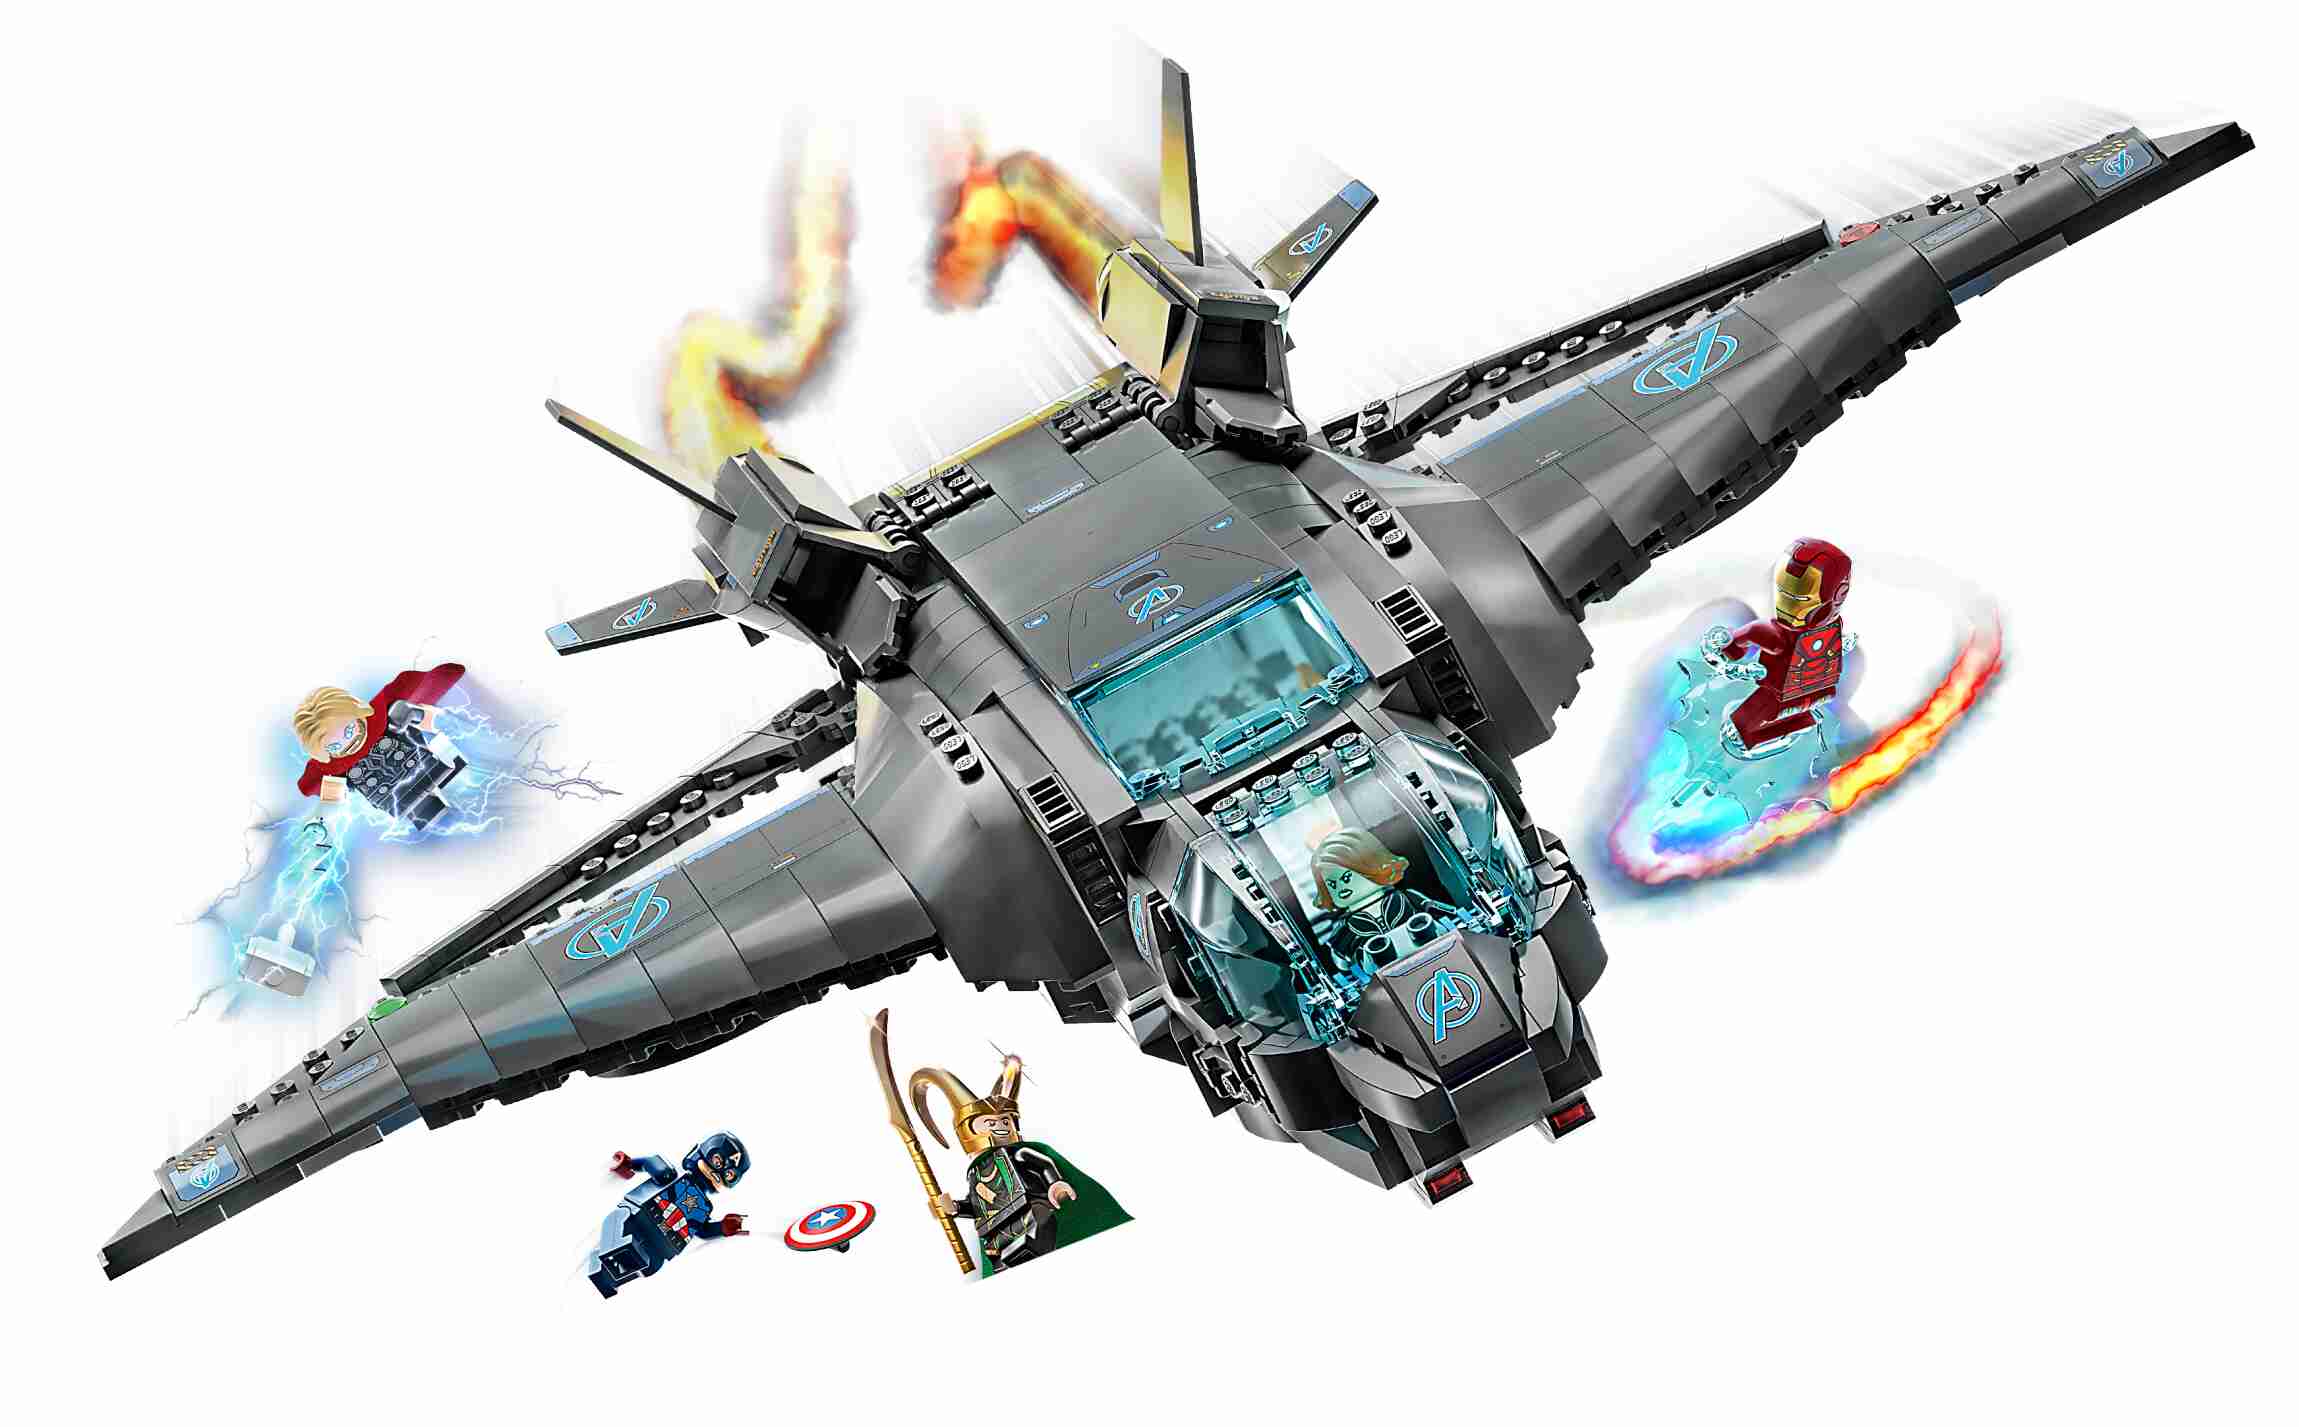 LEGO 76248 Marvel Der Quinjet der Avengers, 5 legendäre Minifiguren